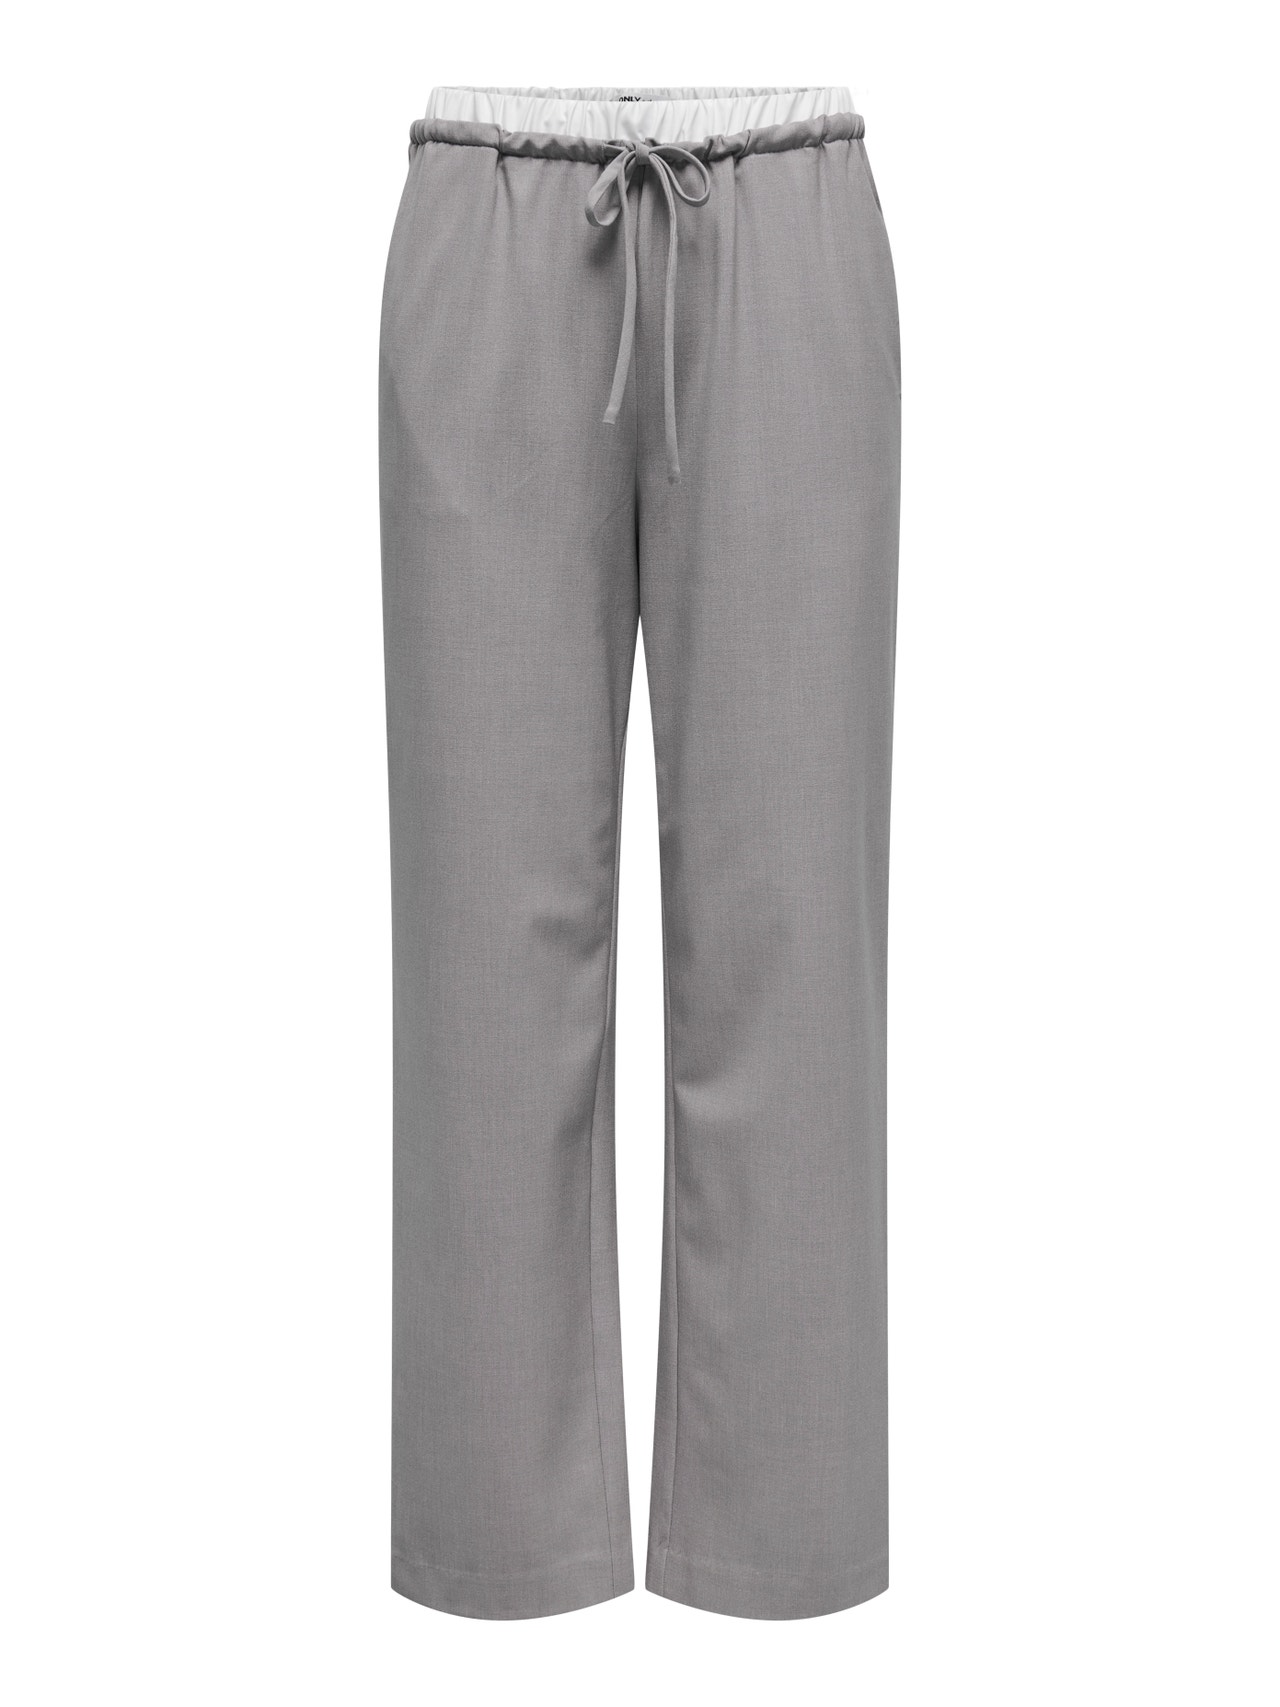 ONLY Gerade geschnitten Hohe Taille Hose -Light Grey Melange - 15338509